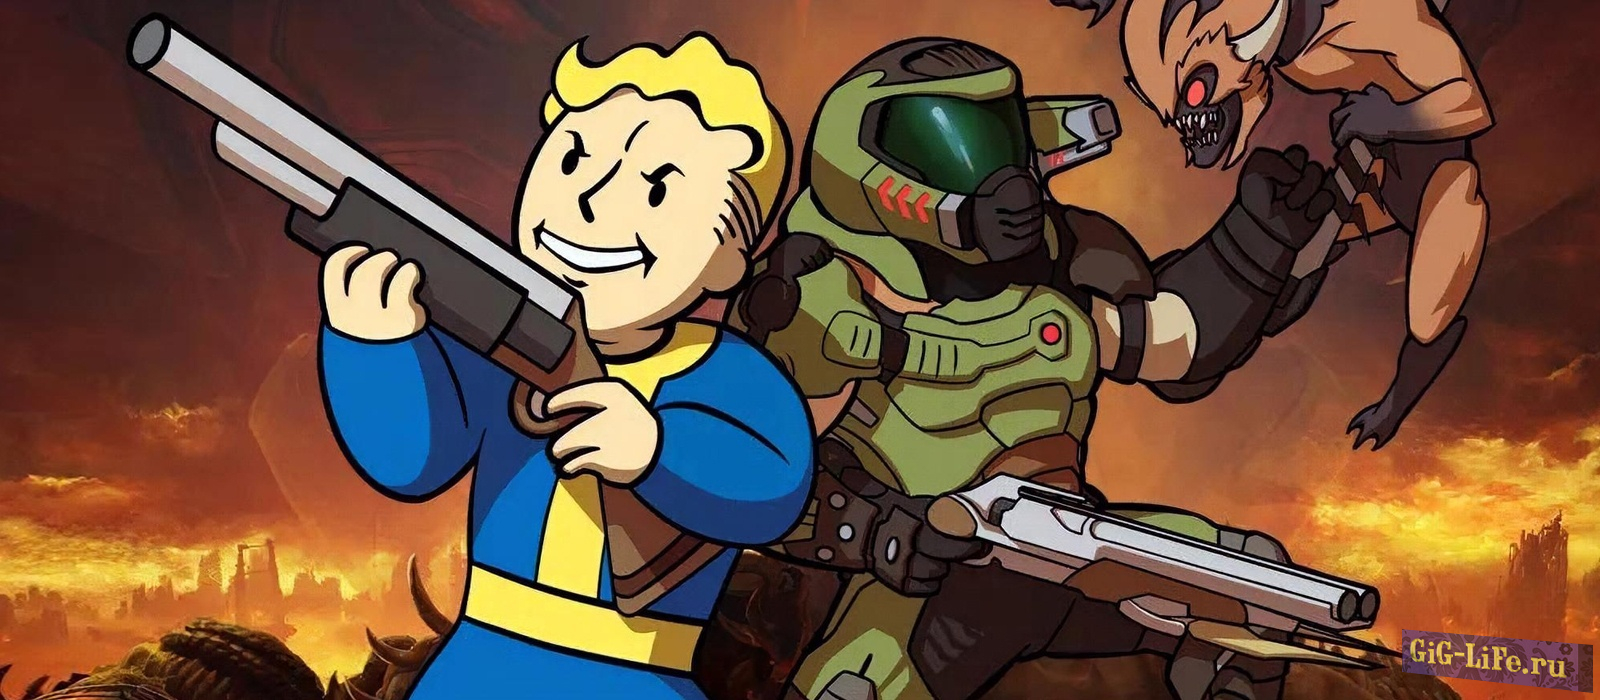 Fallout Shelter Online — Дополнение с монстрами из Doom Eternal